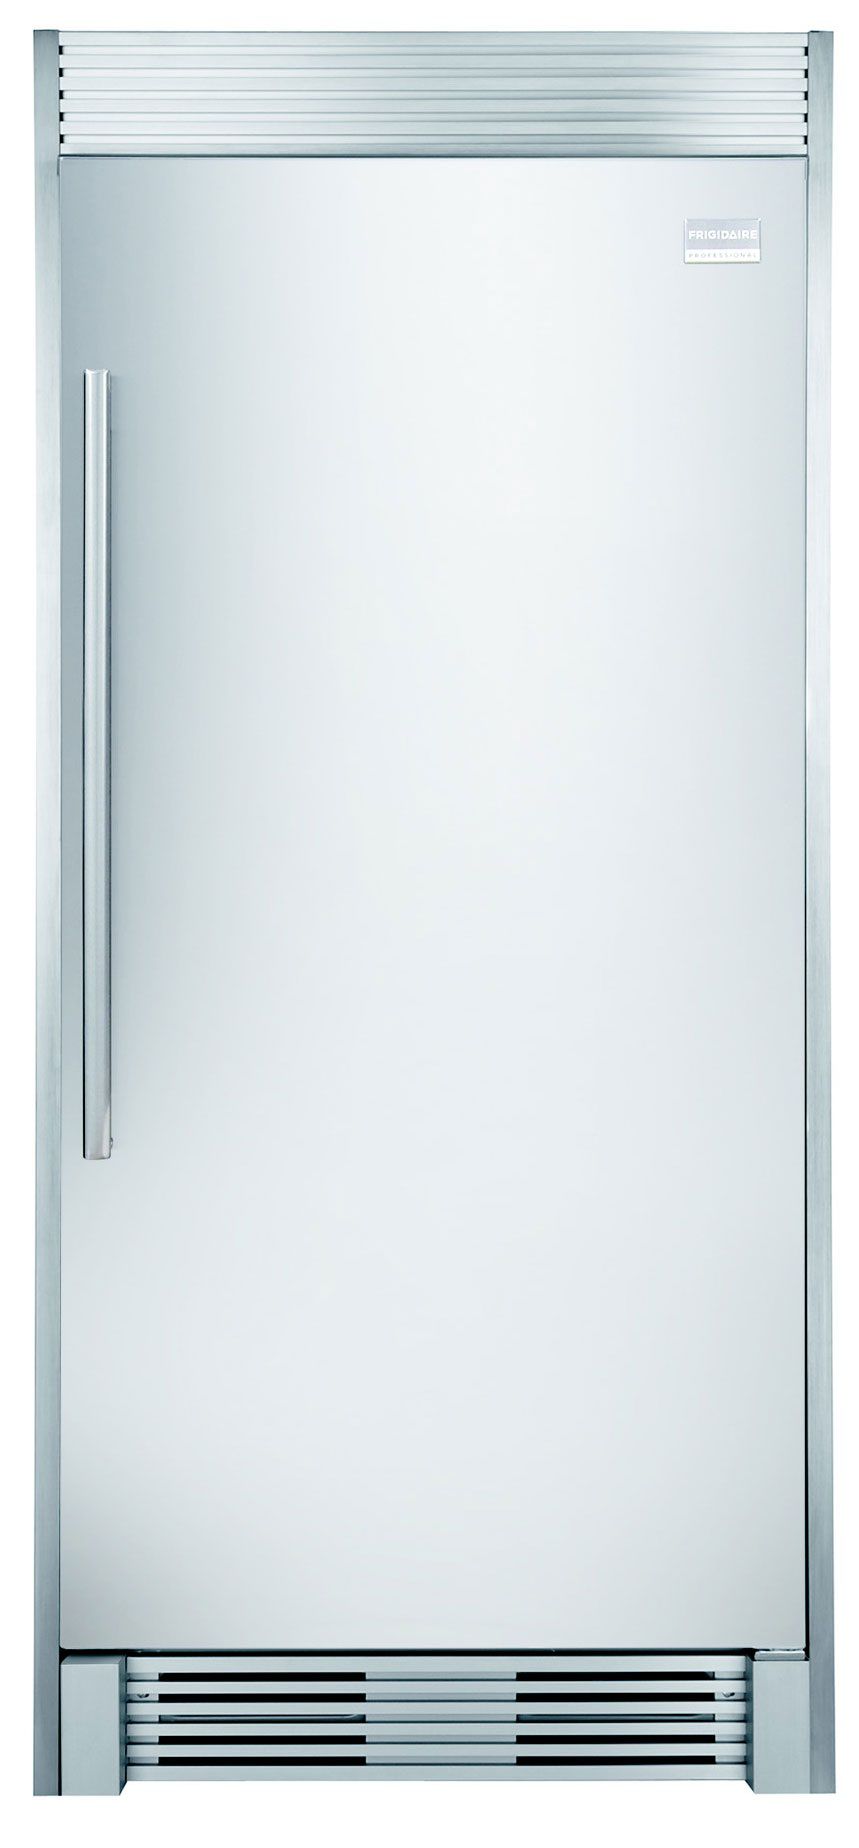 Frigidaire 19.0 cu. ft. Freezerless Refrigerator, Stainless Steel